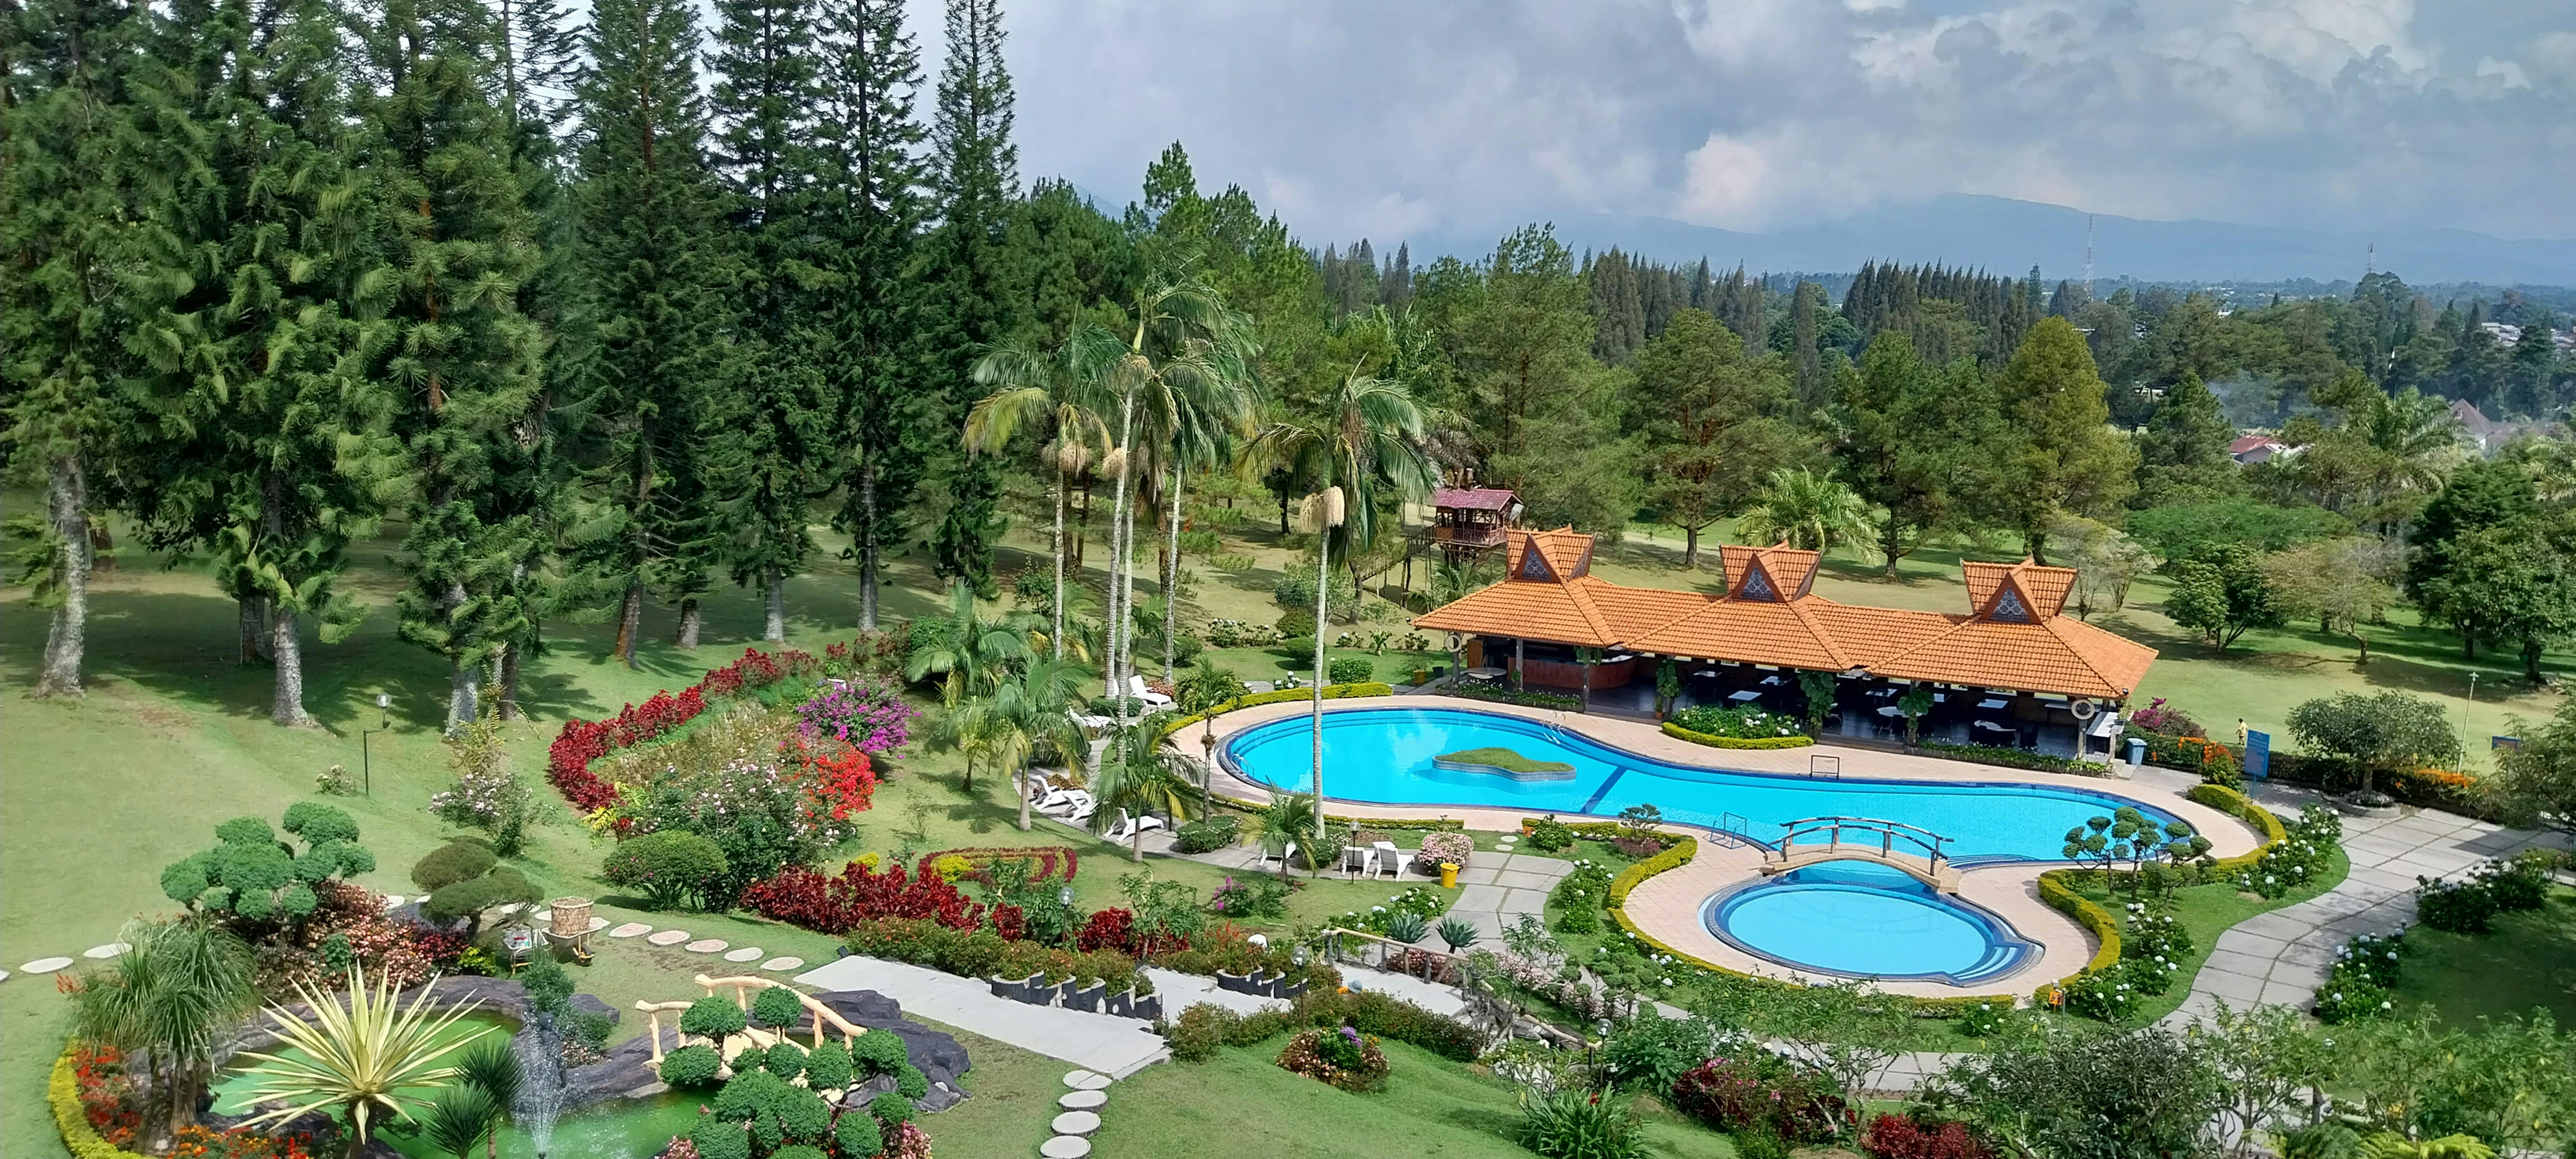 The swimming pool of Hotel Sinabung Hills, Berastagi